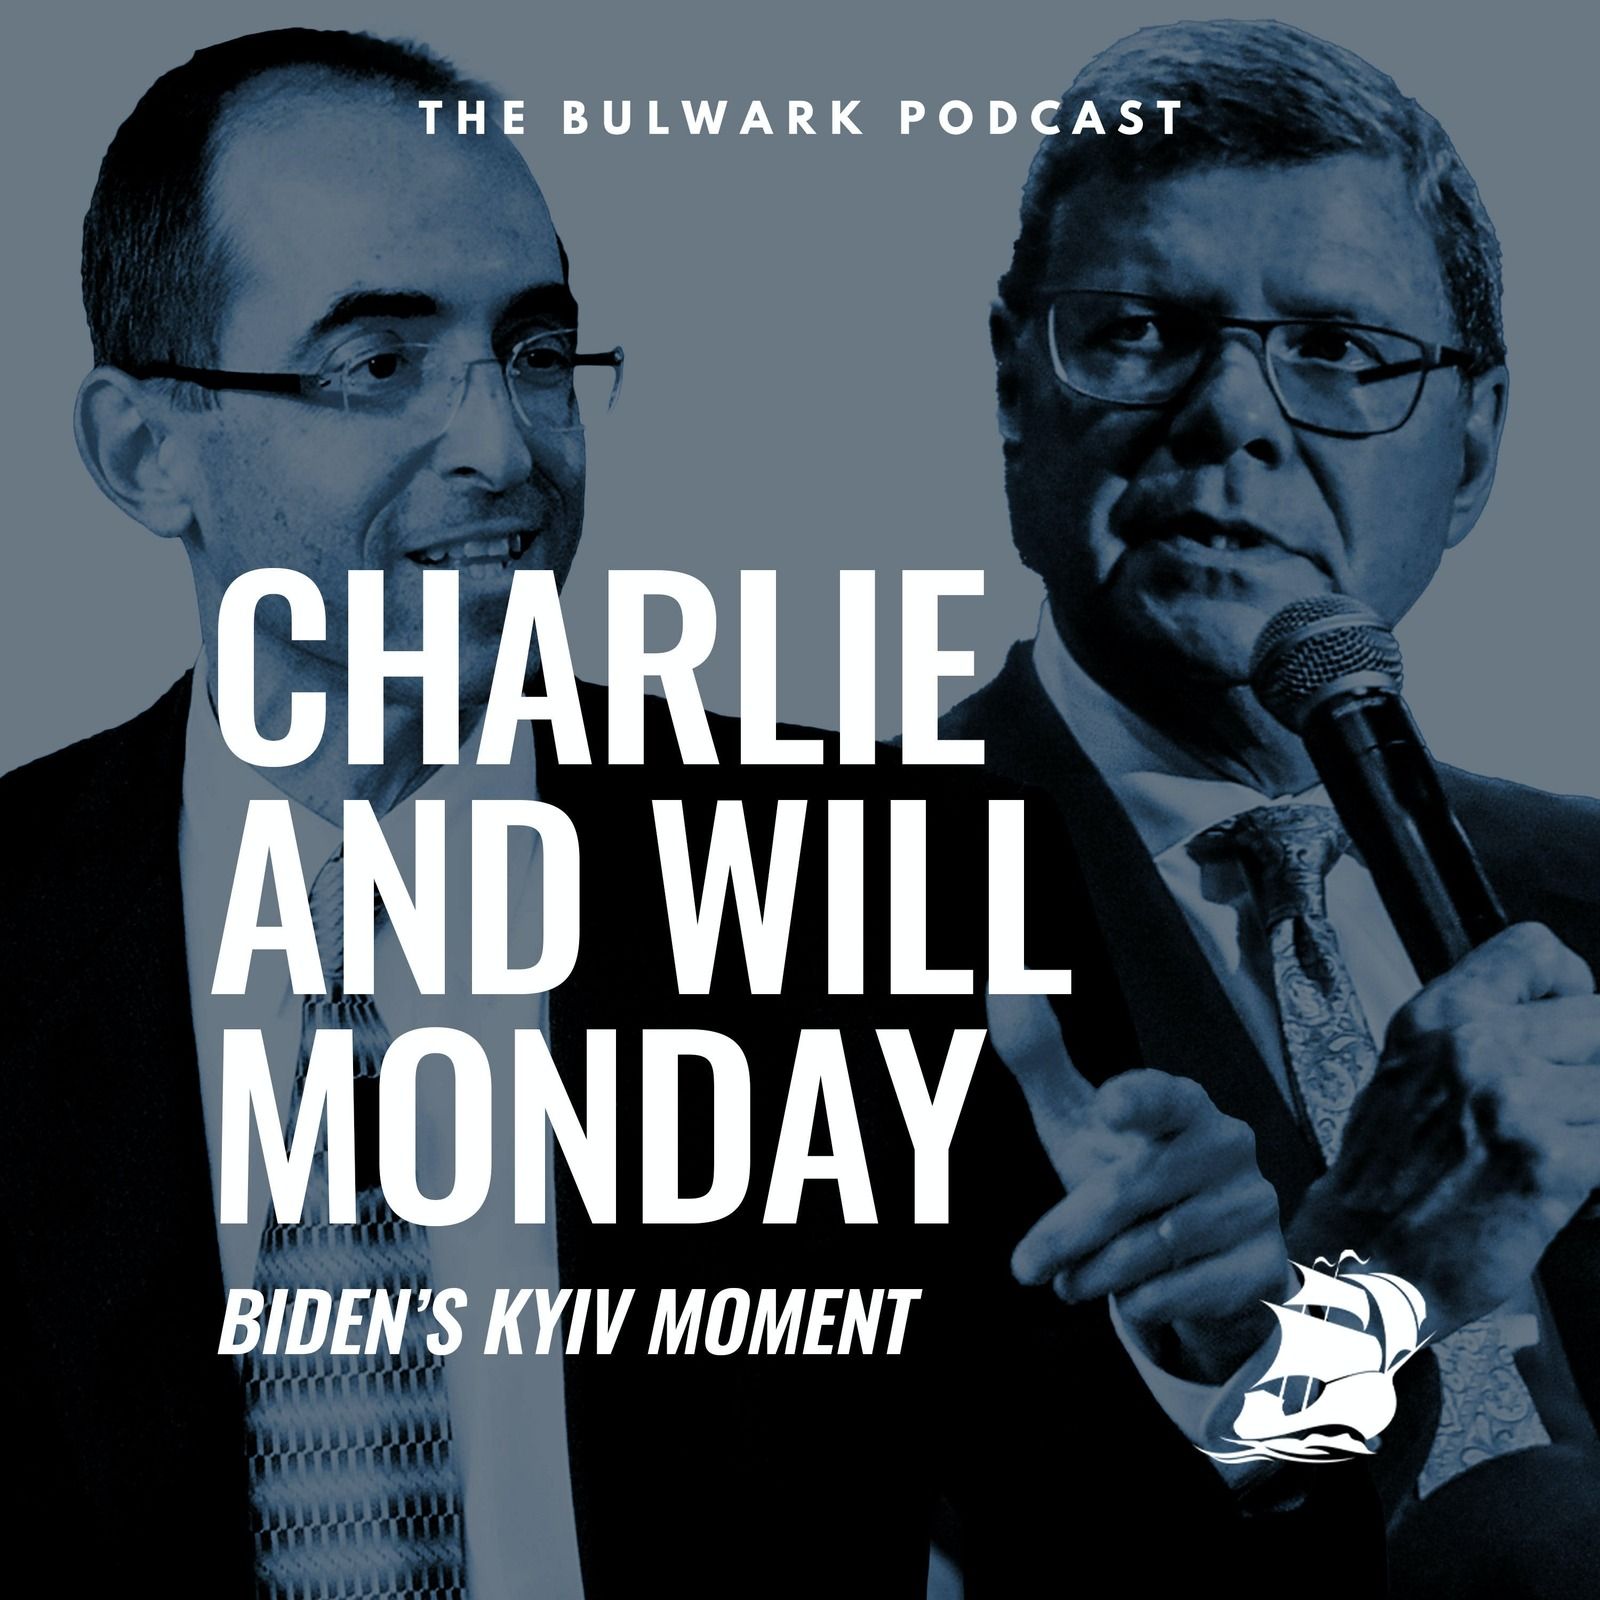 Biden’s Kyiv Moment by The Bulwark Podcast